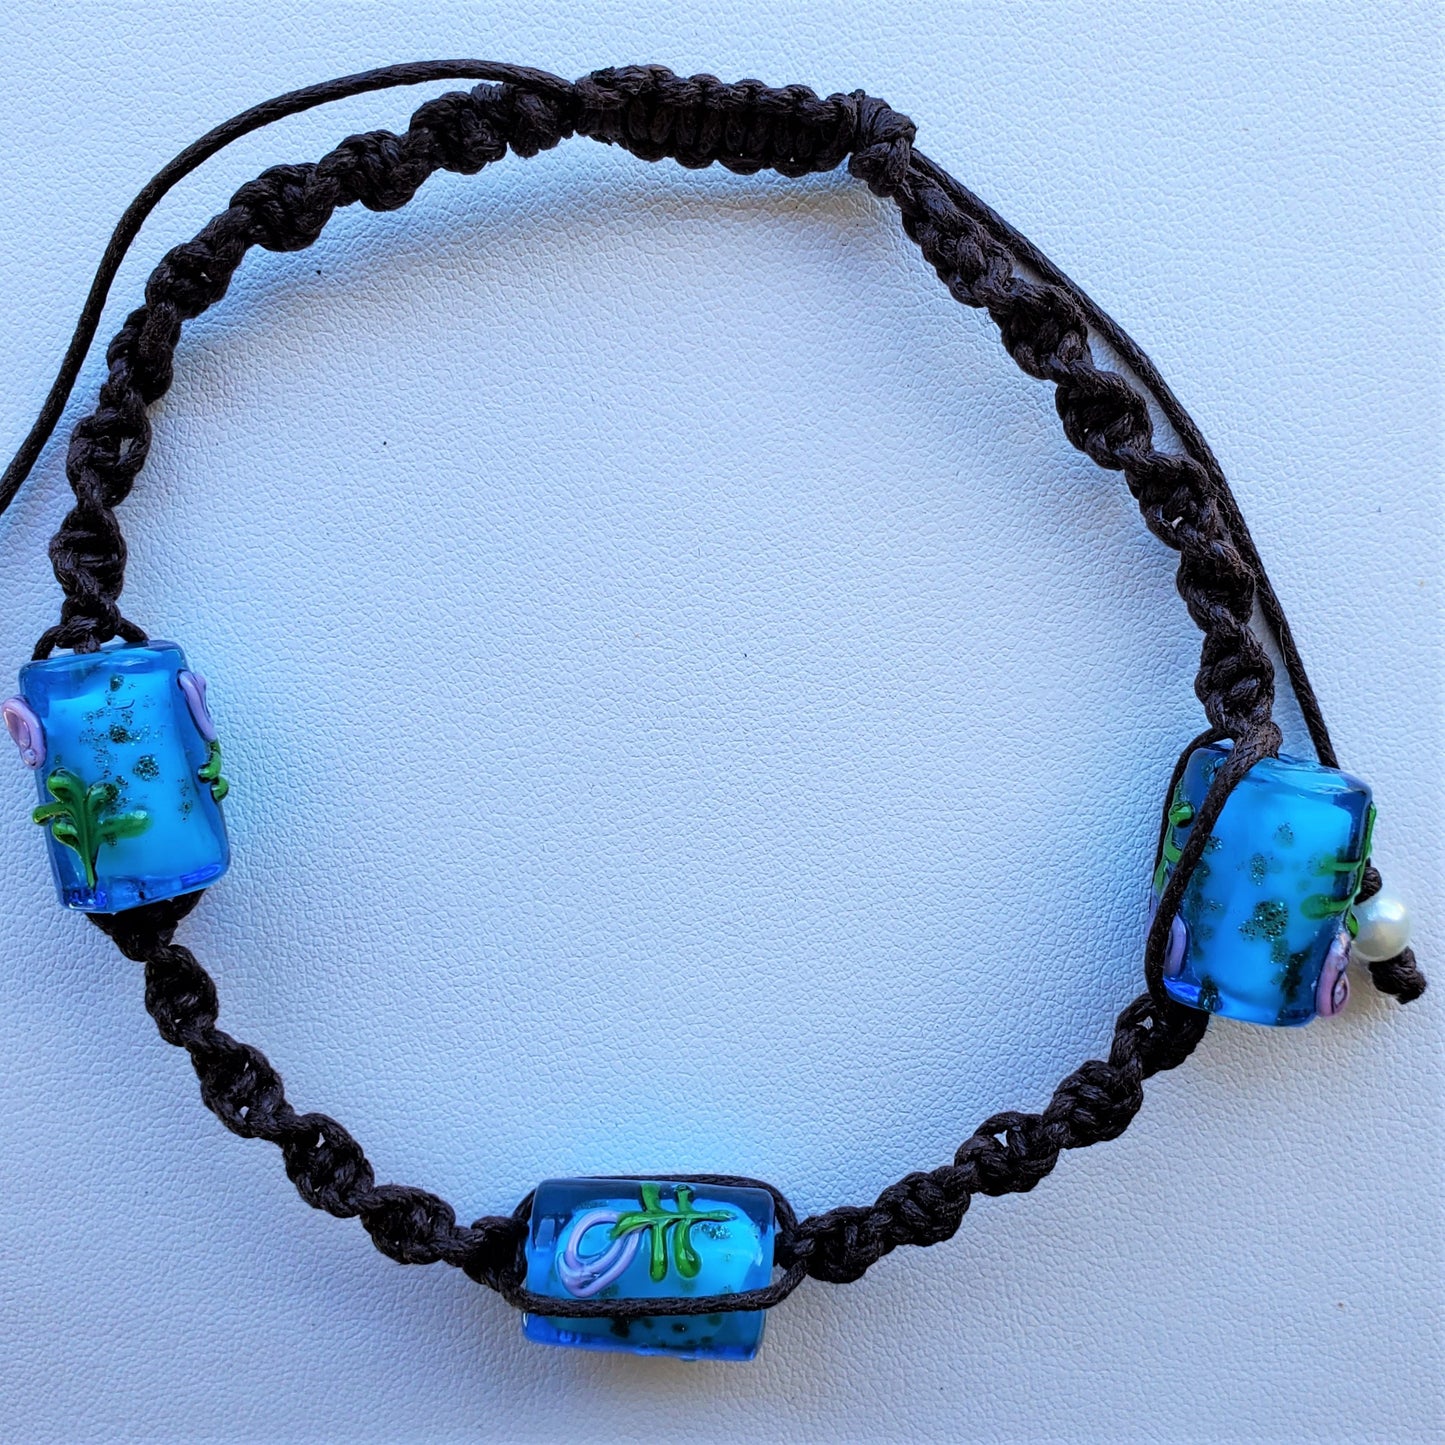 Hand Braided Macramé & Recycled Glass Bead Bracelet - Turquoise Tubes